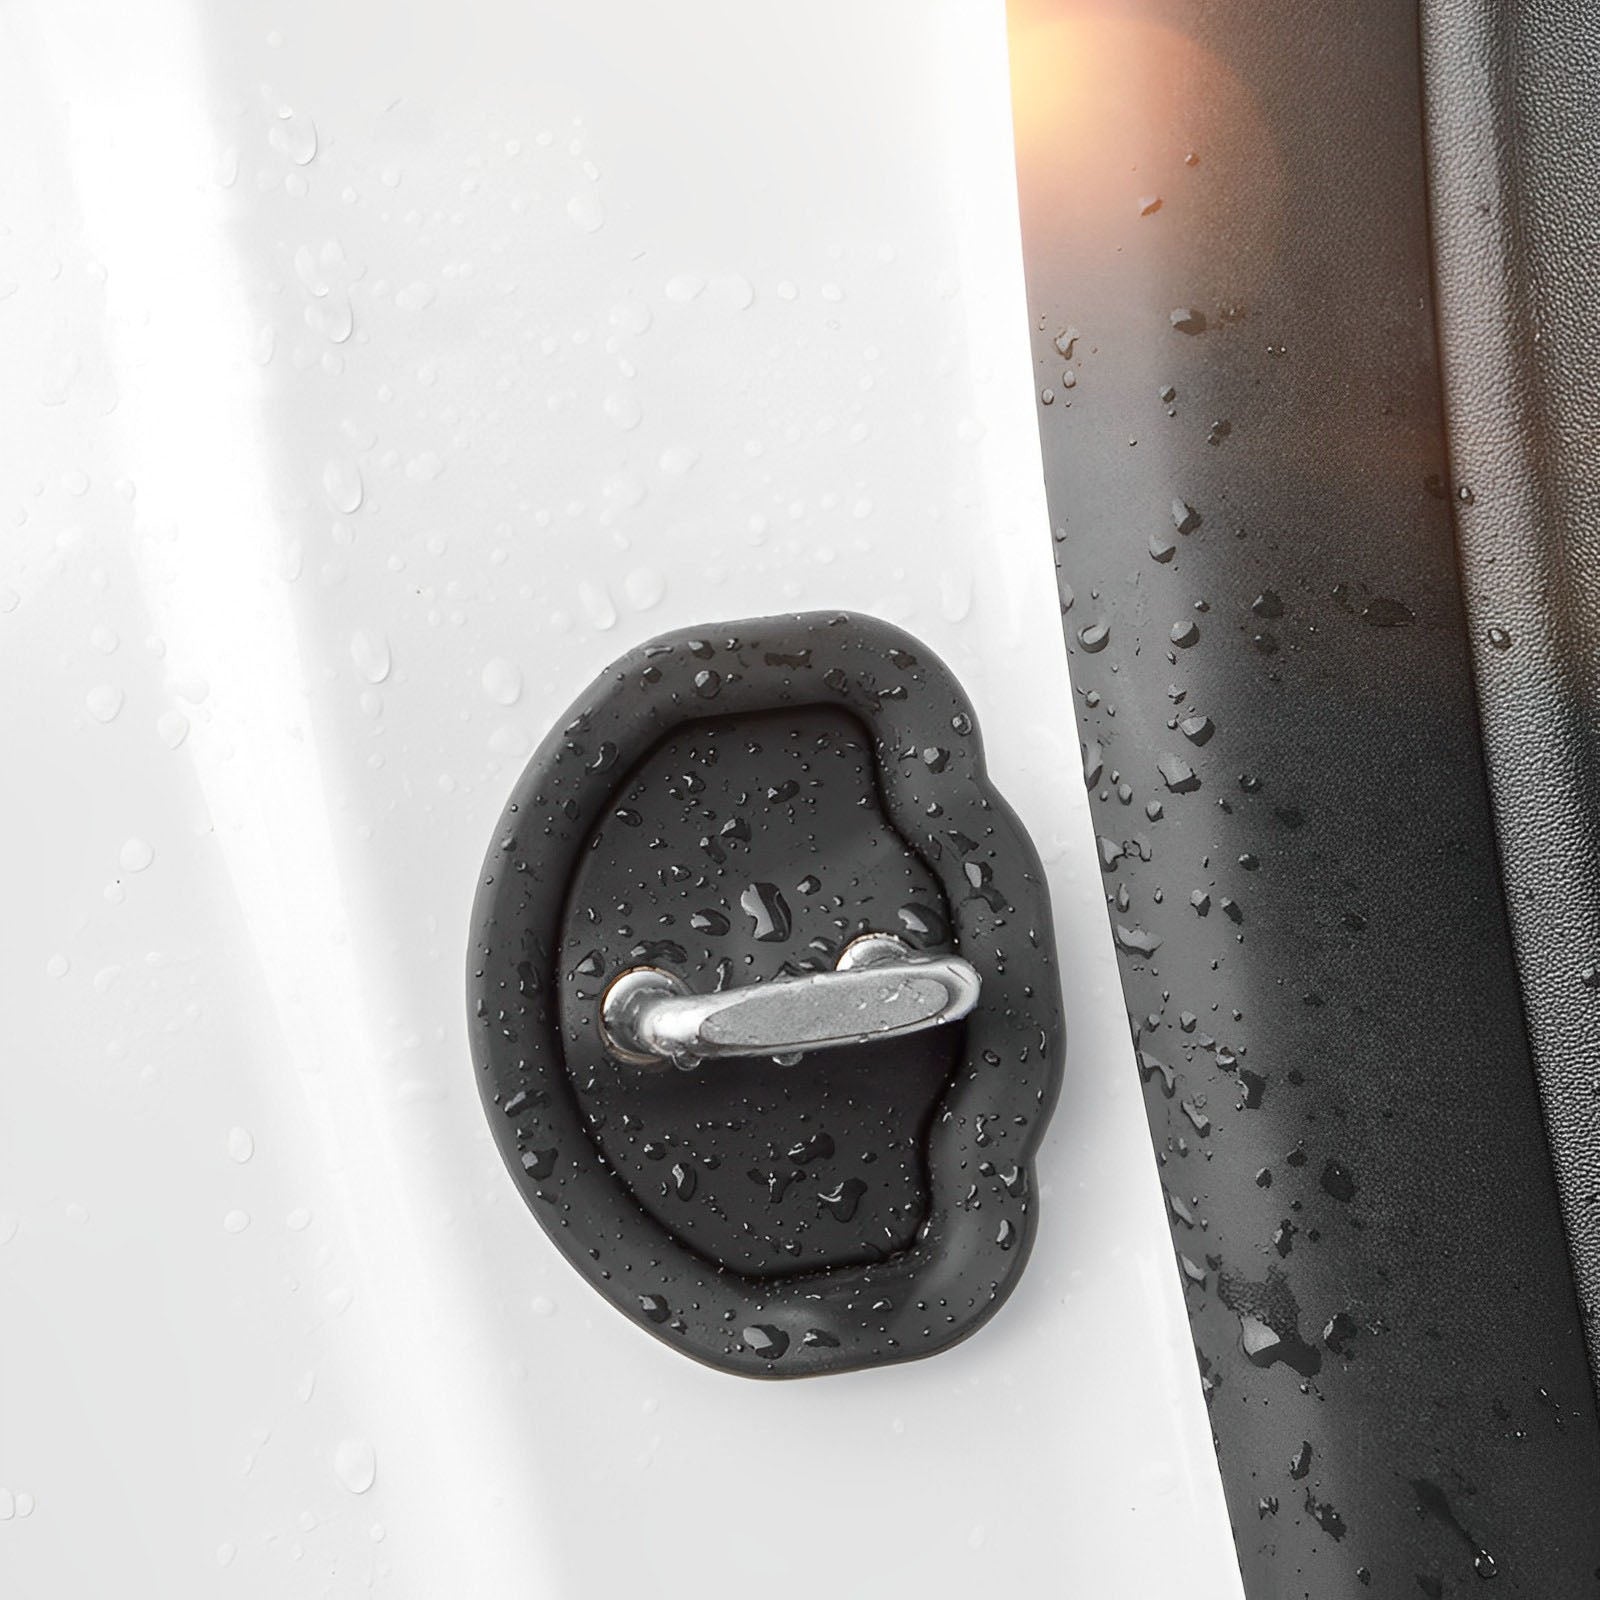 Noise Reduction Door Latch Lock Cover for Tesla Model 3/Y (4 Pcs)